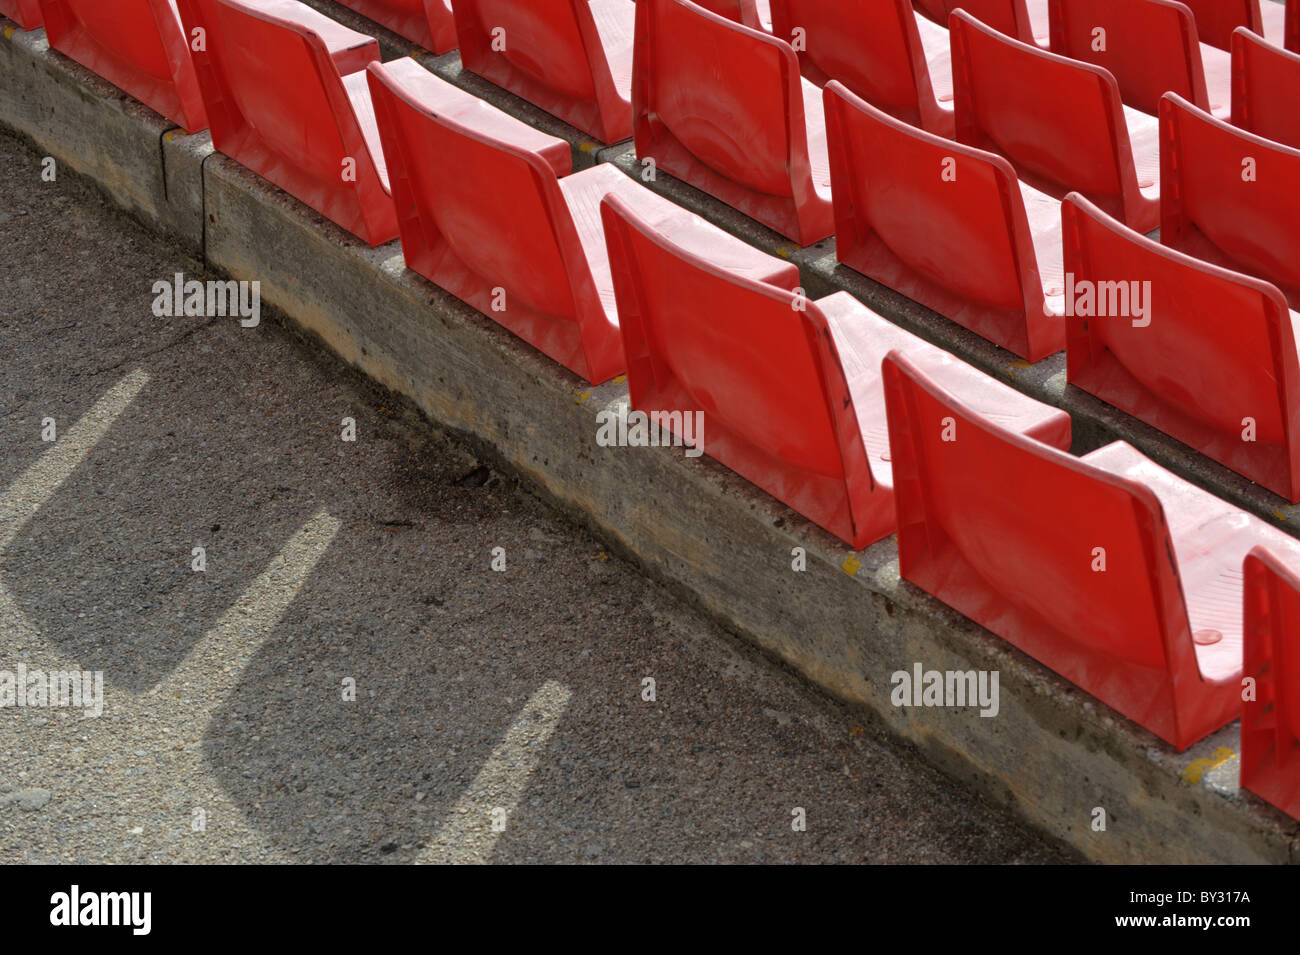 Freie Plätze im Stadion Stockfoto